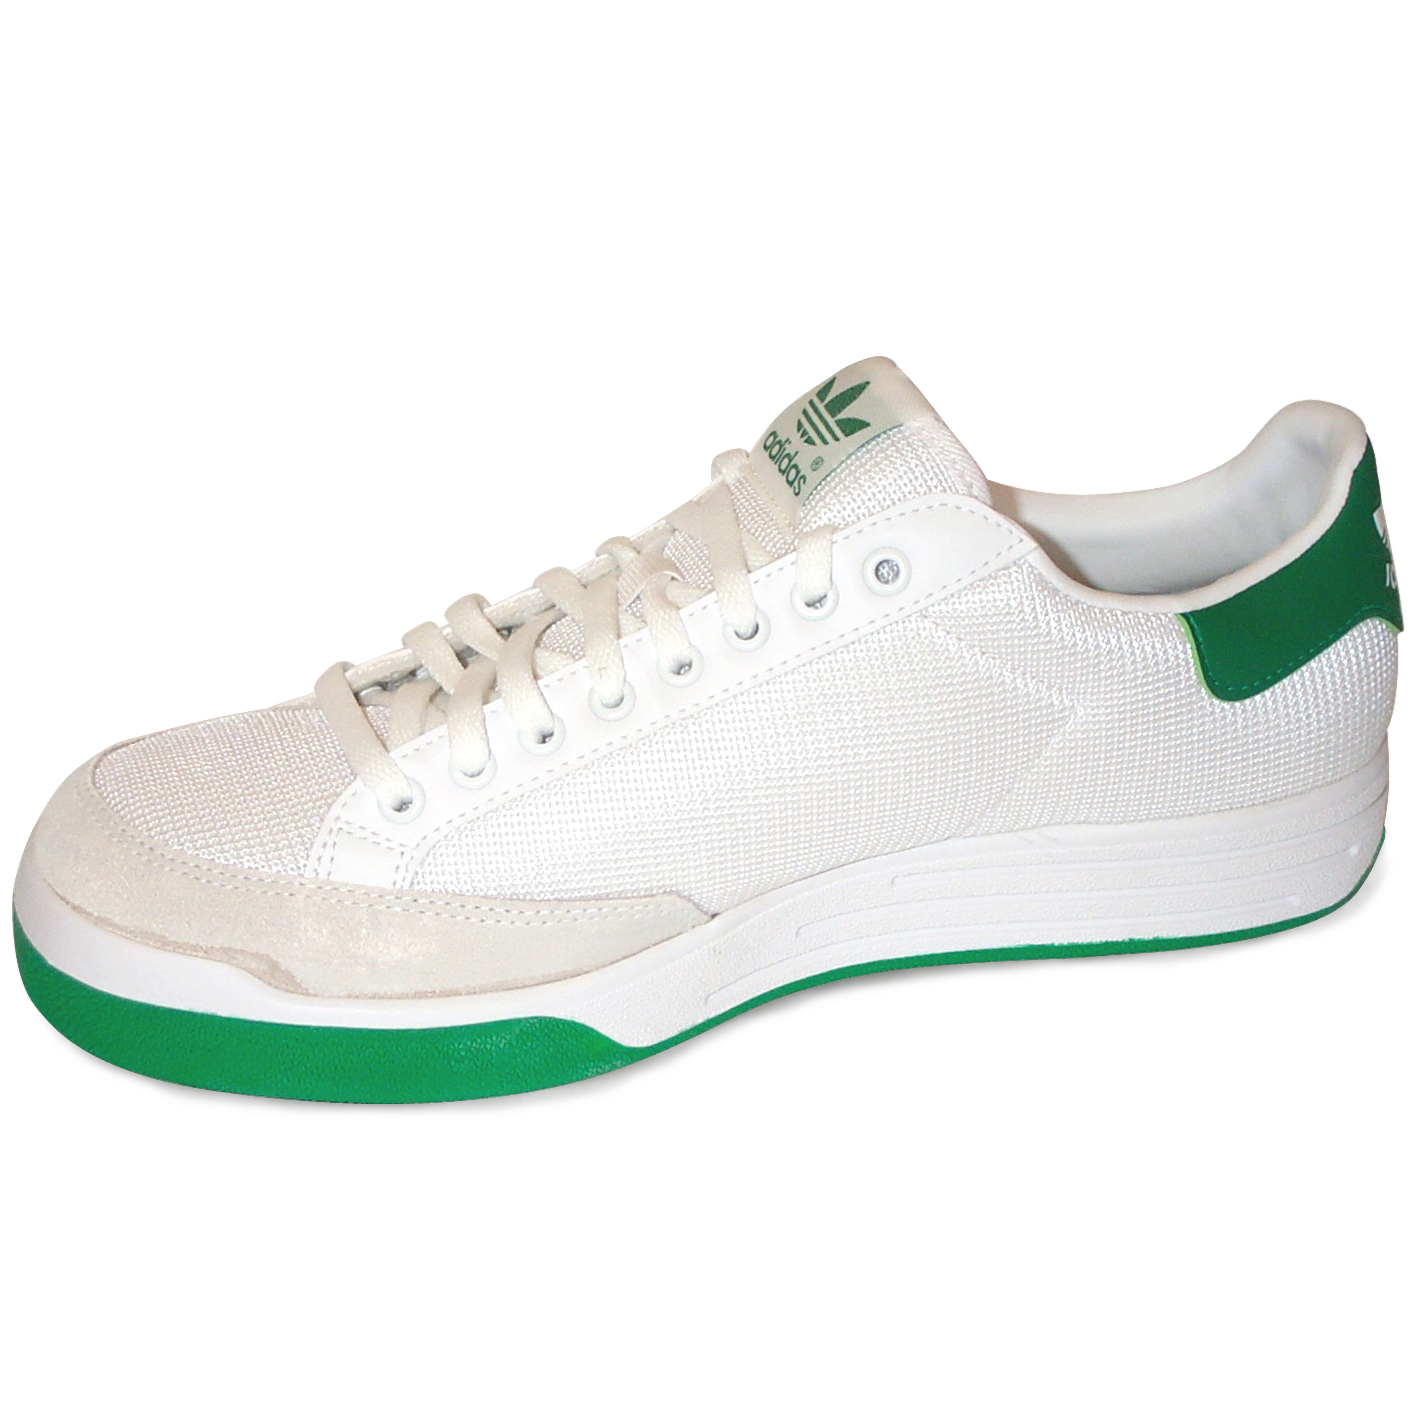 Adidas Rod Laver Super Tennis Shoes 